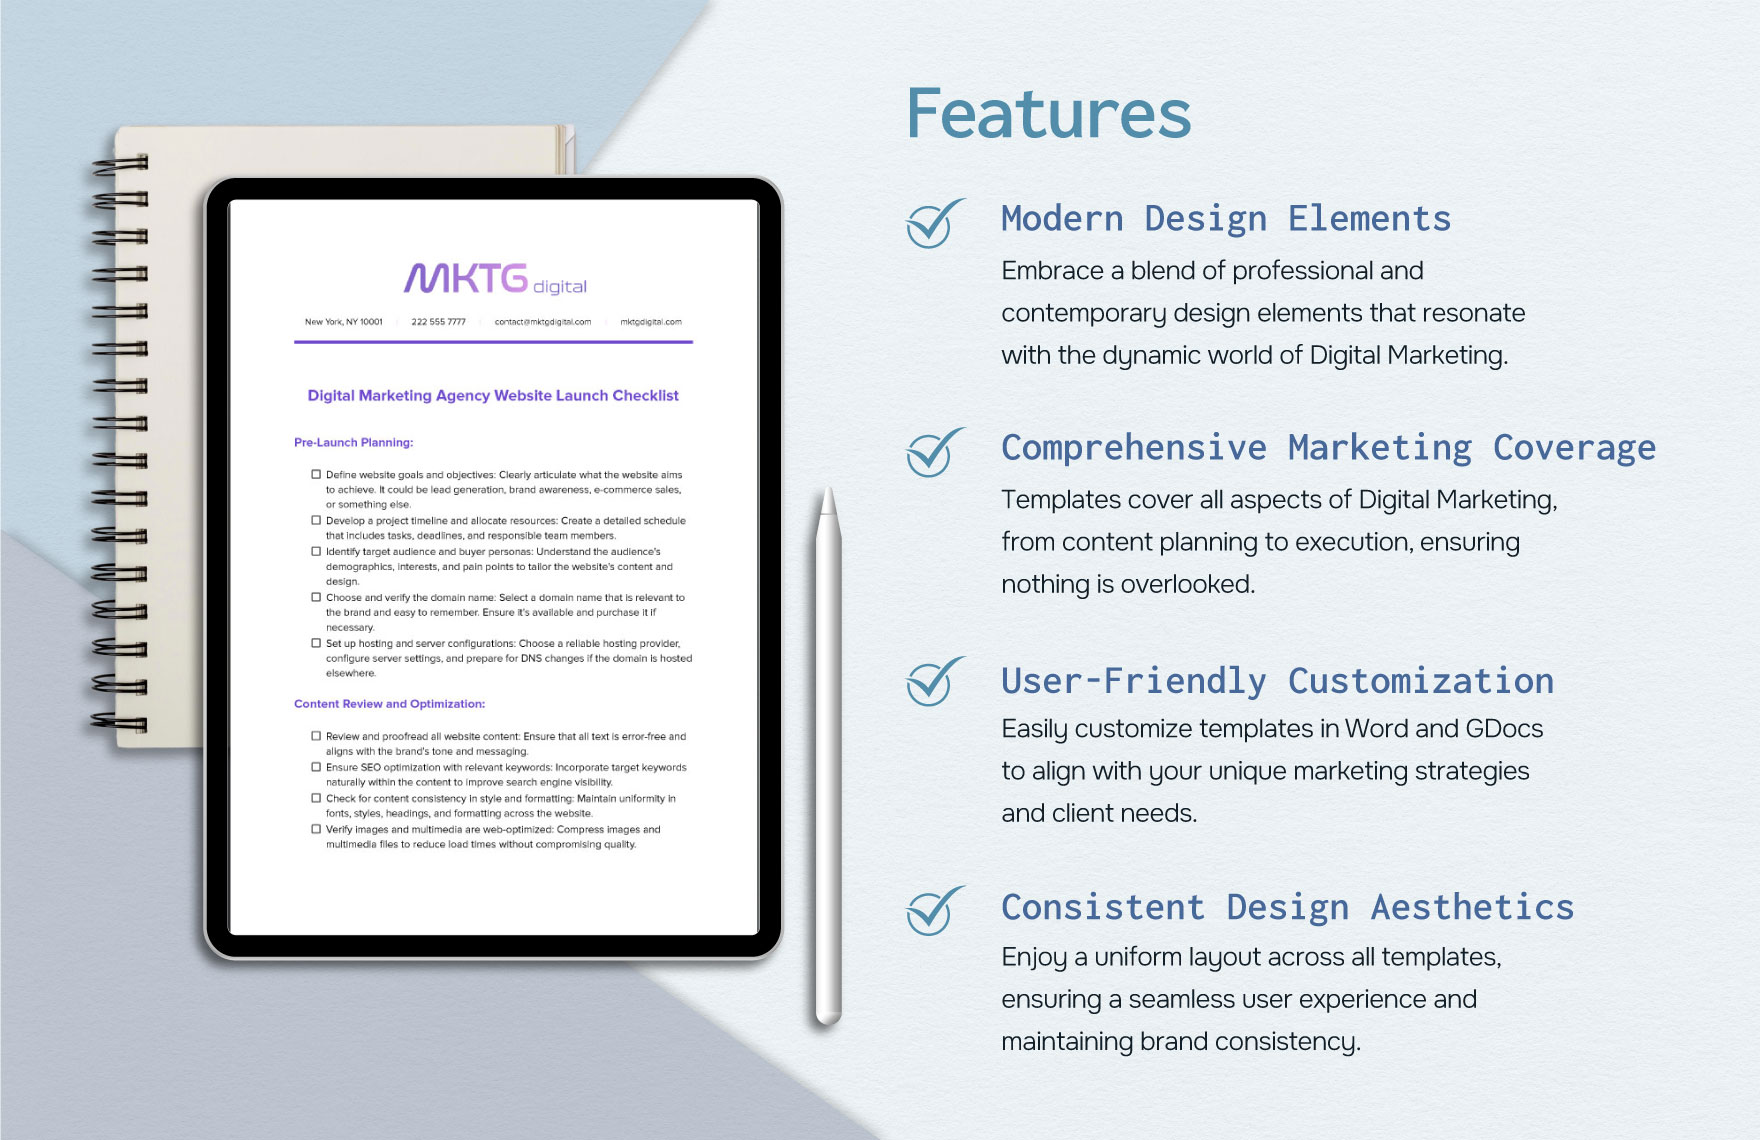 Digital Marketing Agency Website Launch Checklist Template